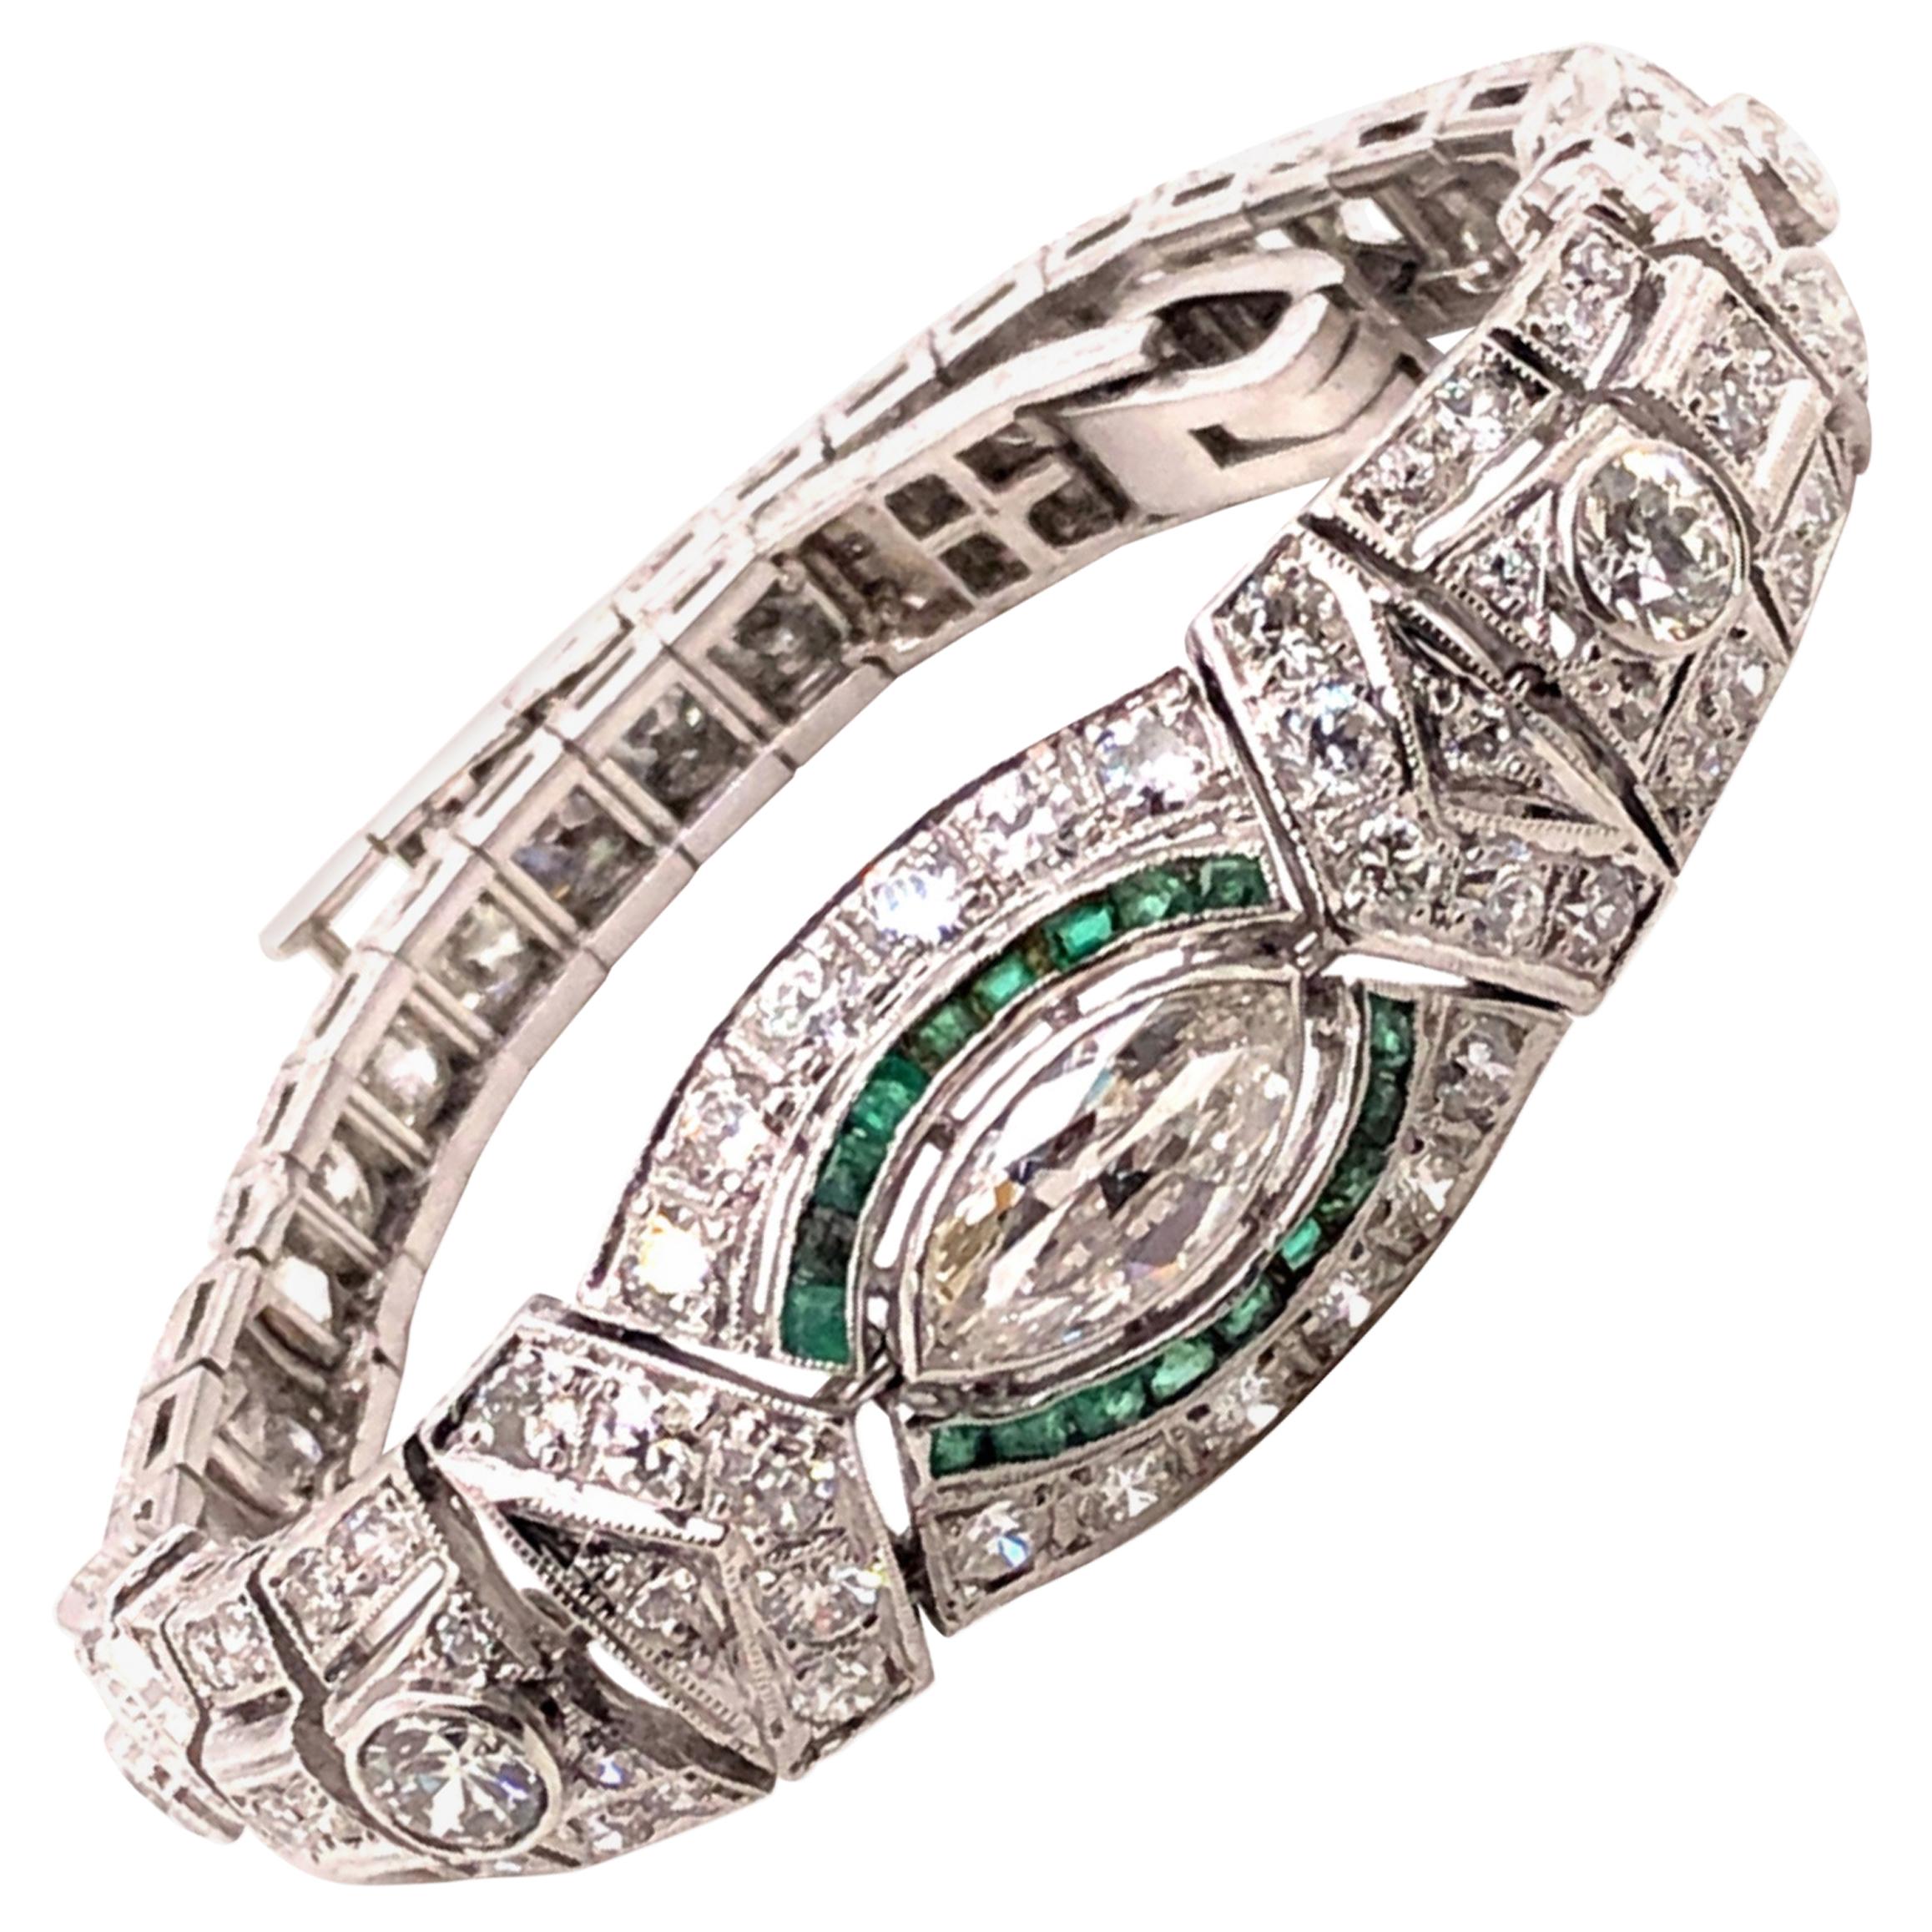 Art Deco 5.76 Carat Diamond and French Cut Emerald Bracelet